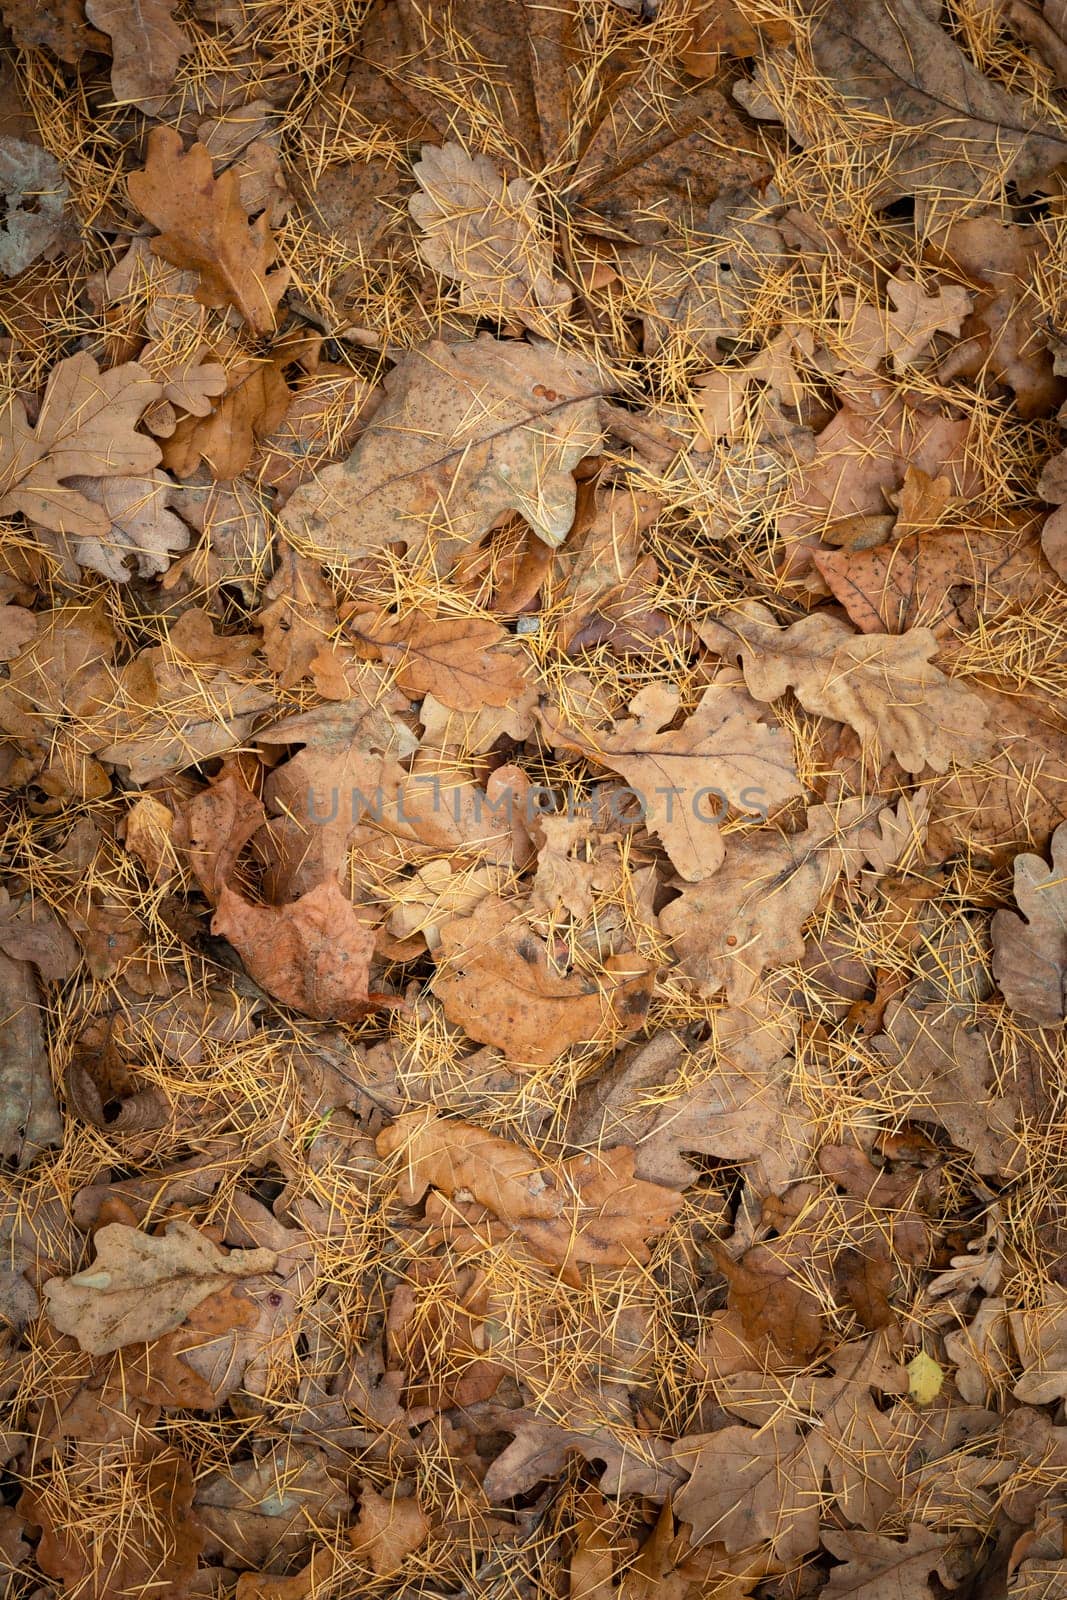 Fallen dry oak leaves with pine needles, top view by darekb22